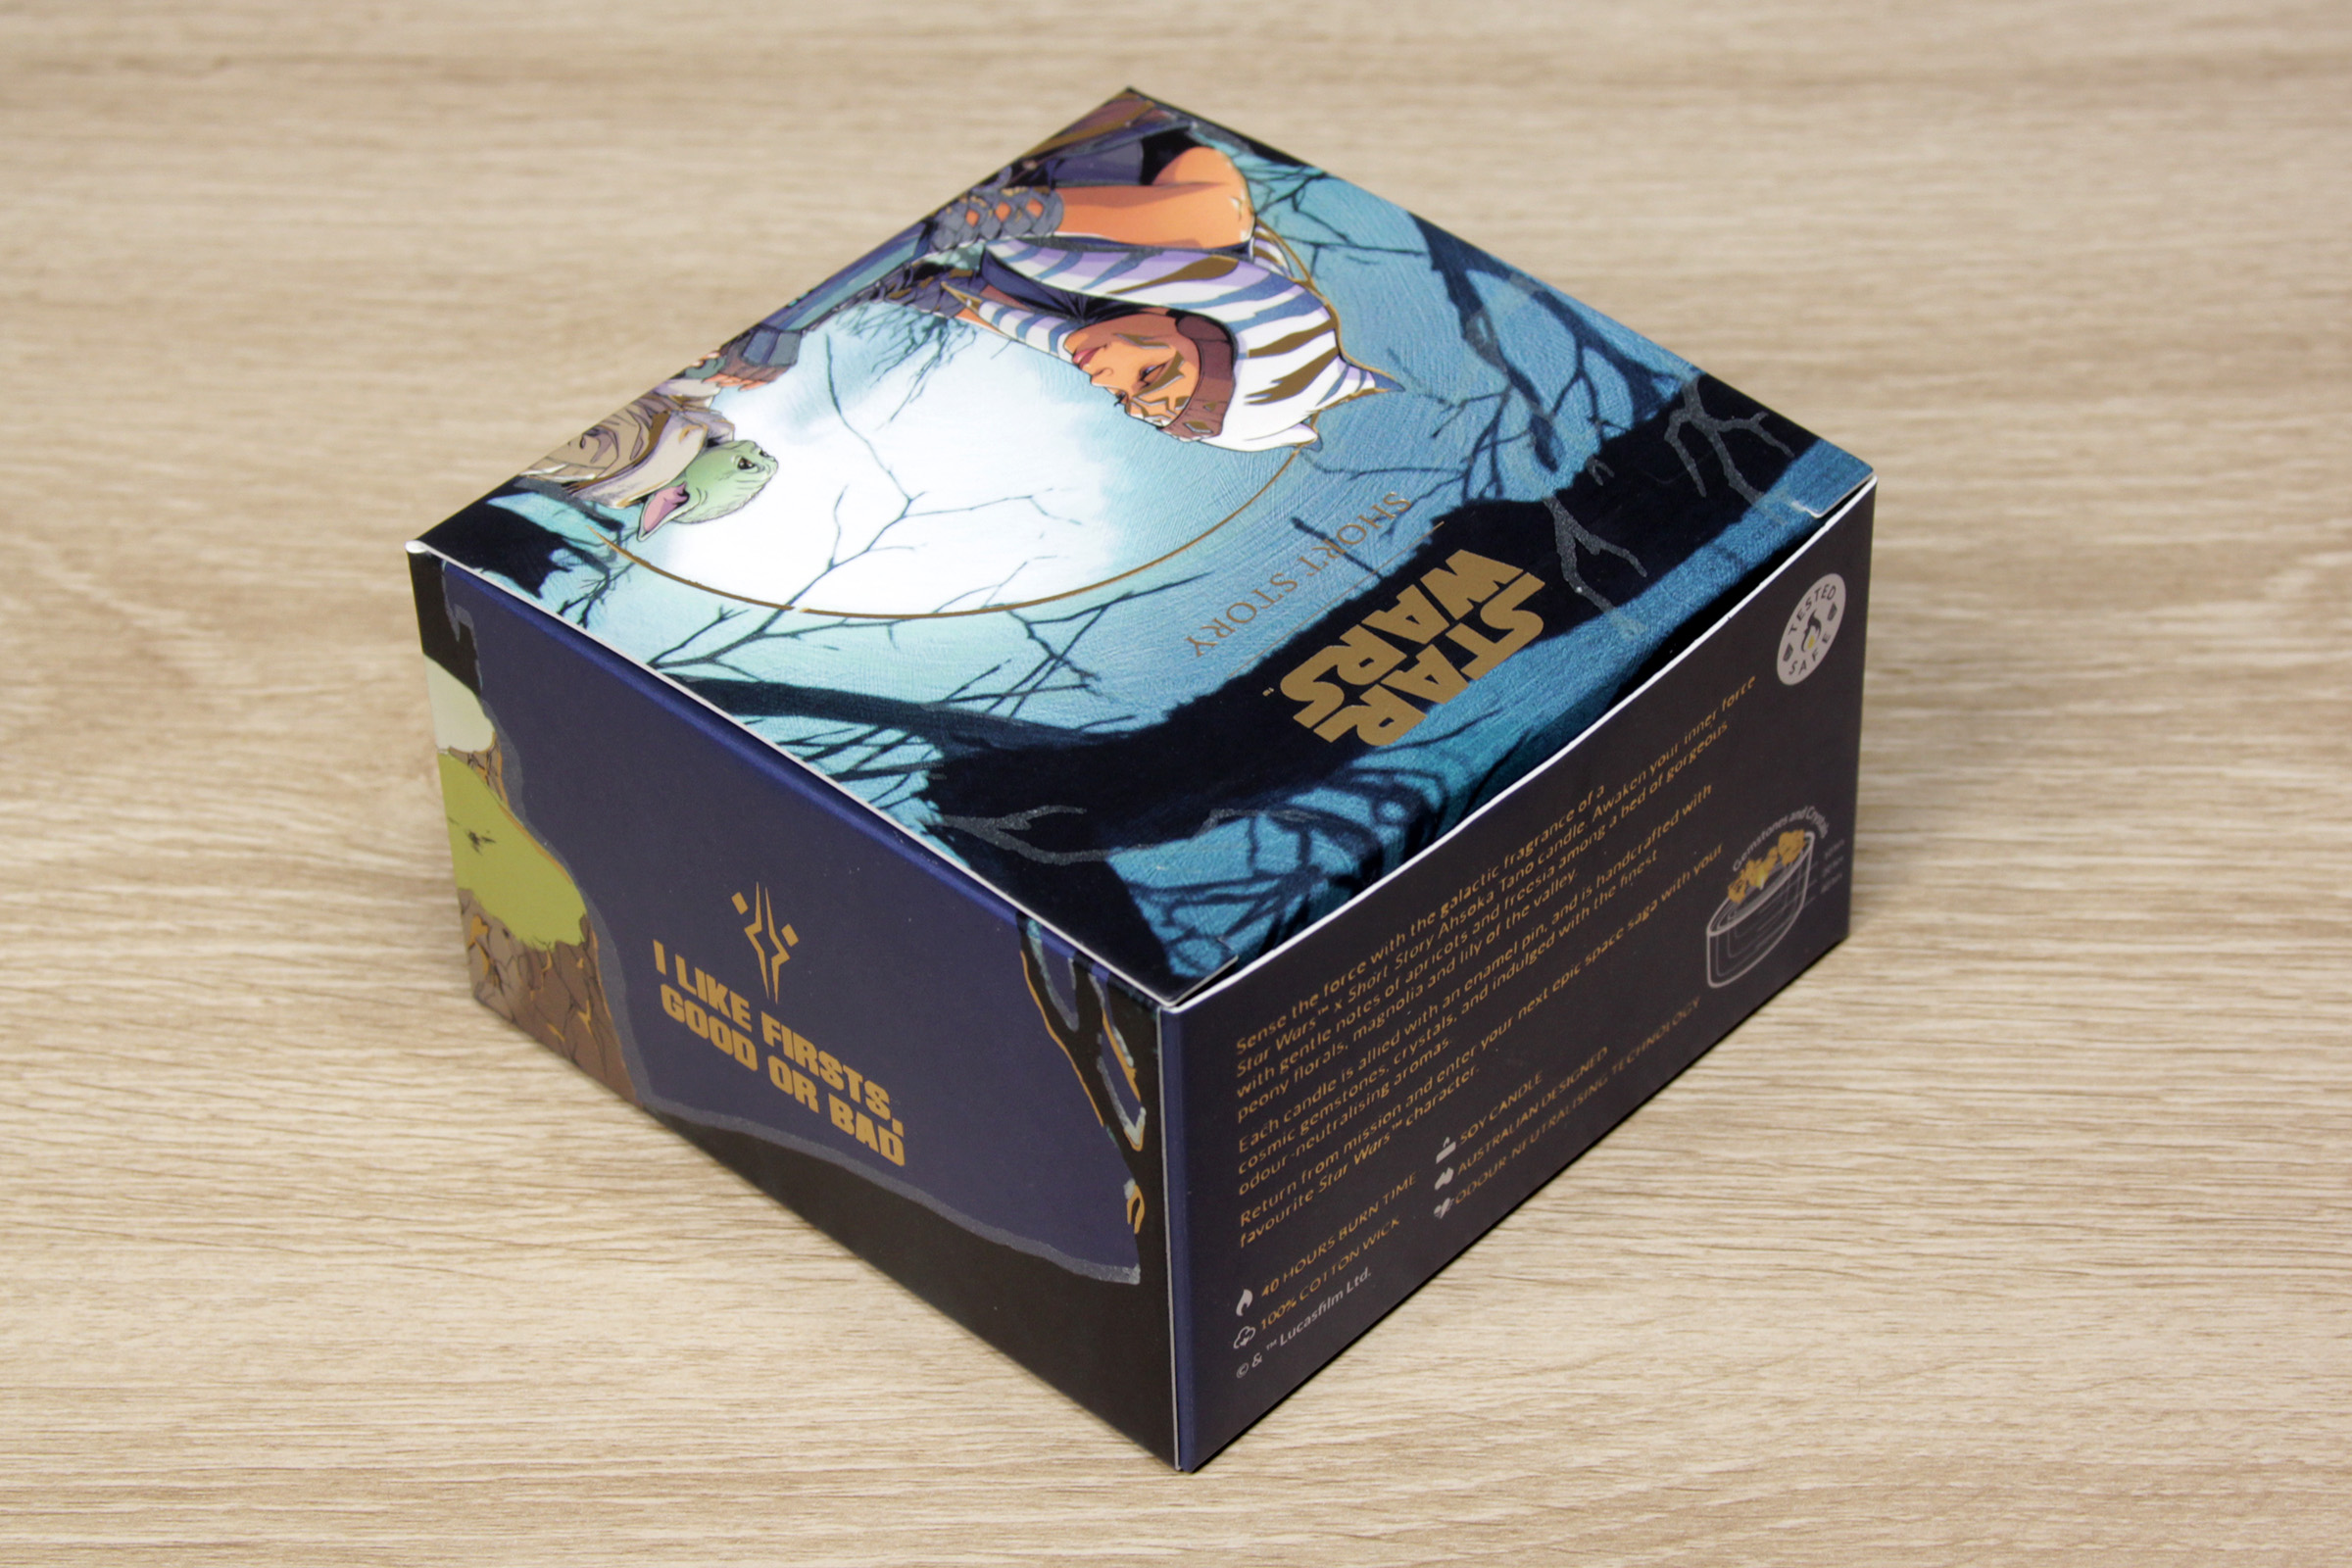 Short Story x Star Wars - Packaged Ahsoka Candle